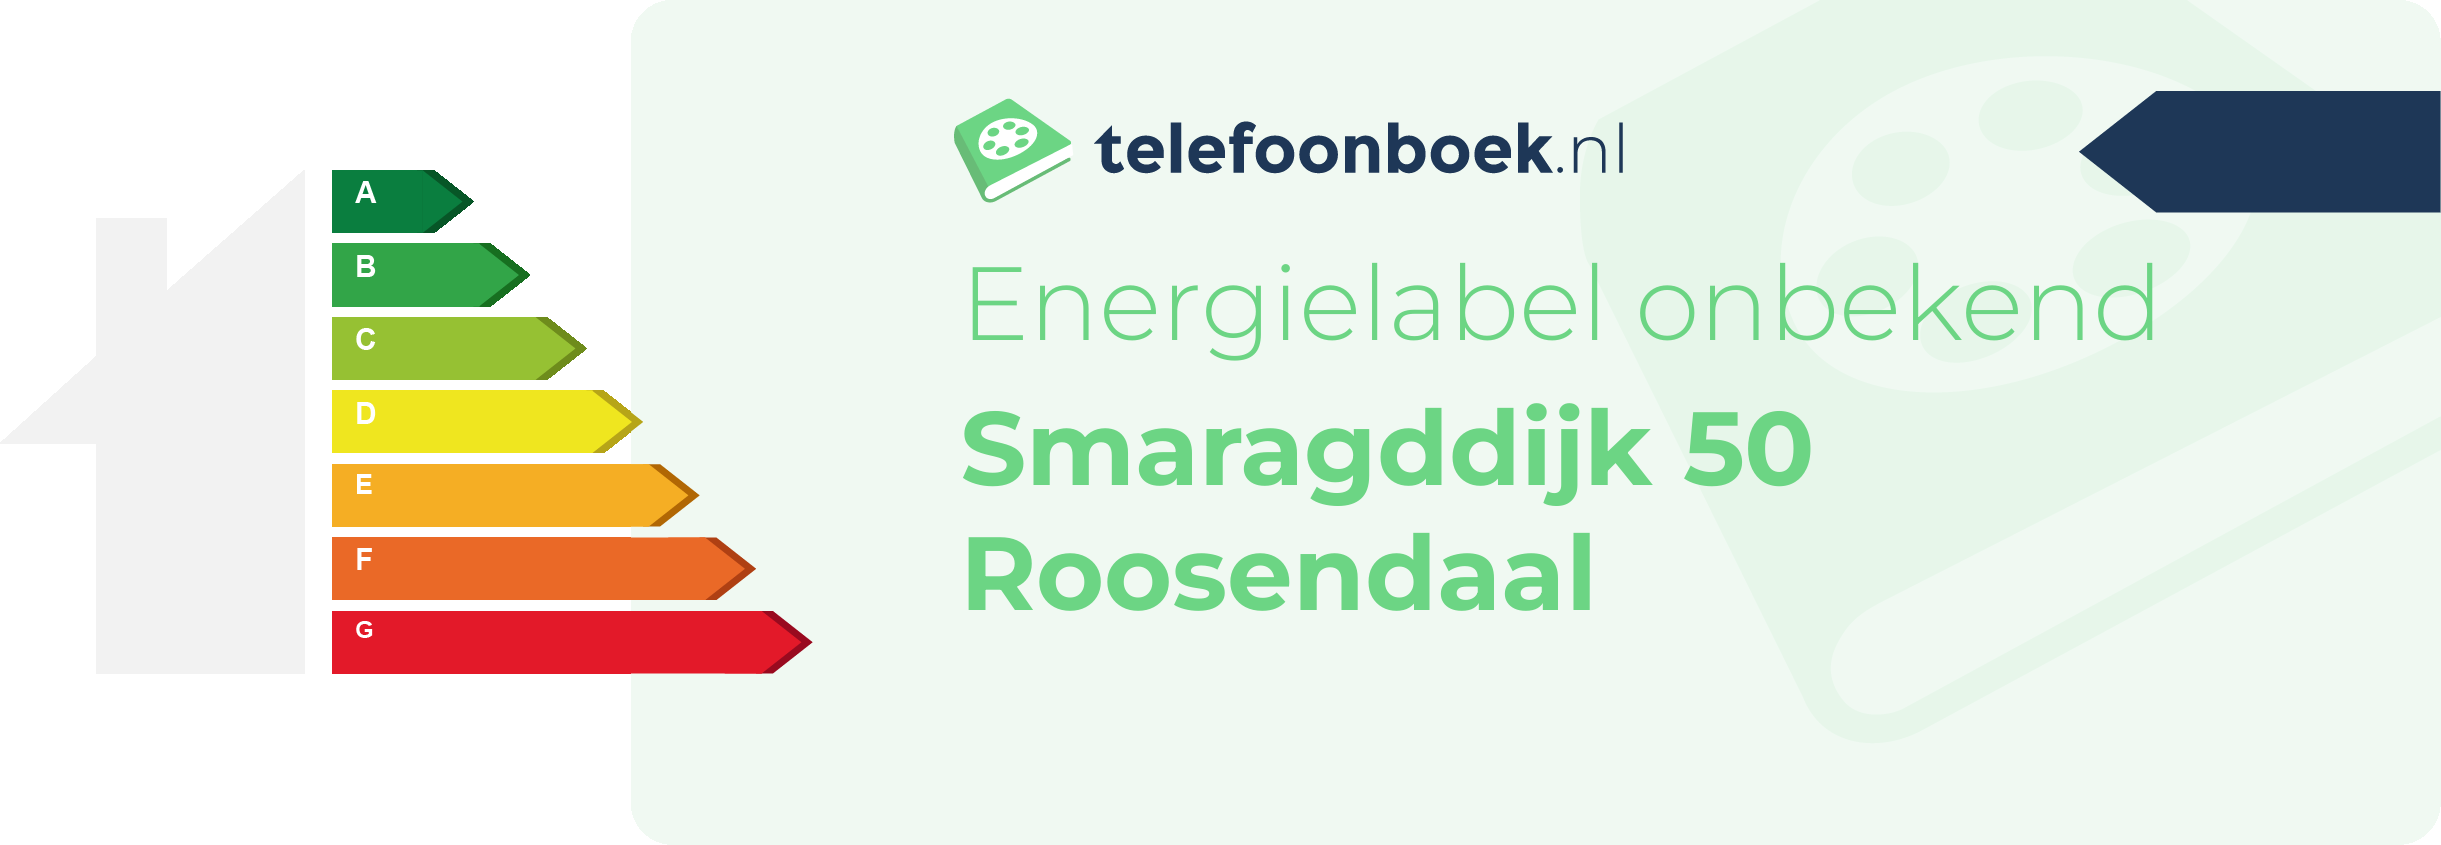 Energielabel Smaragddijk 50 Roosendaal